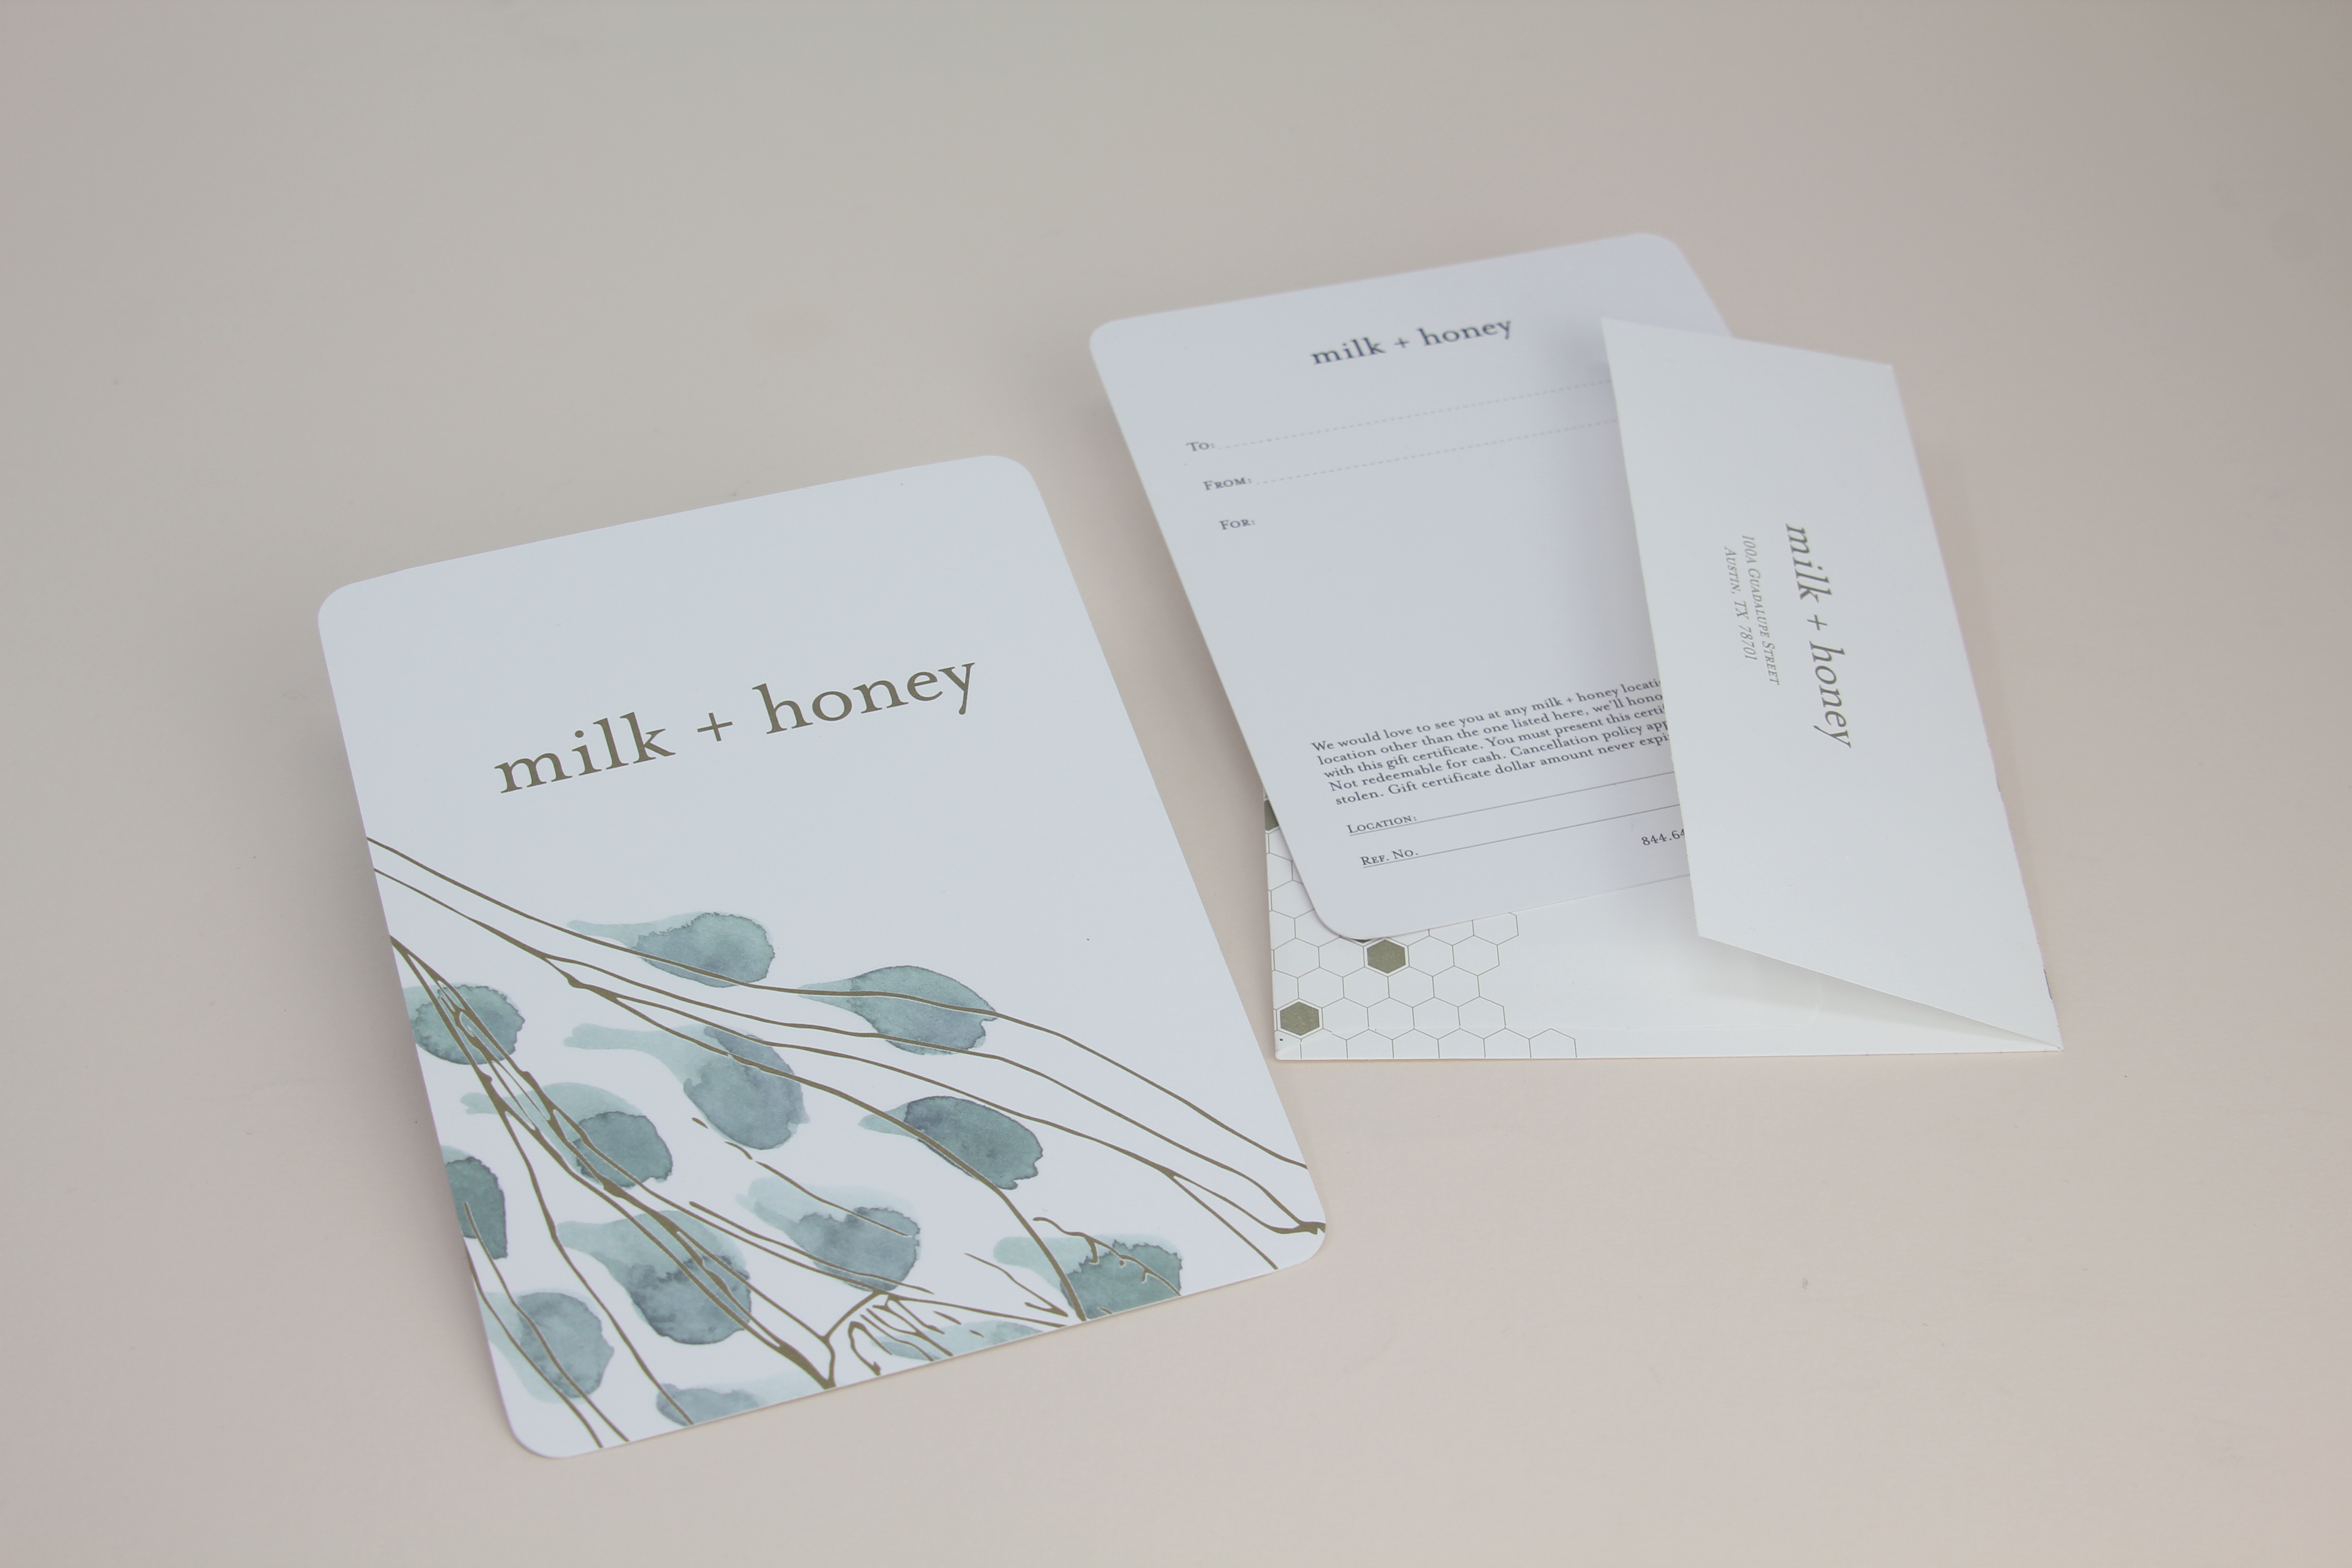 Mail a milk + honey Gift Certificate